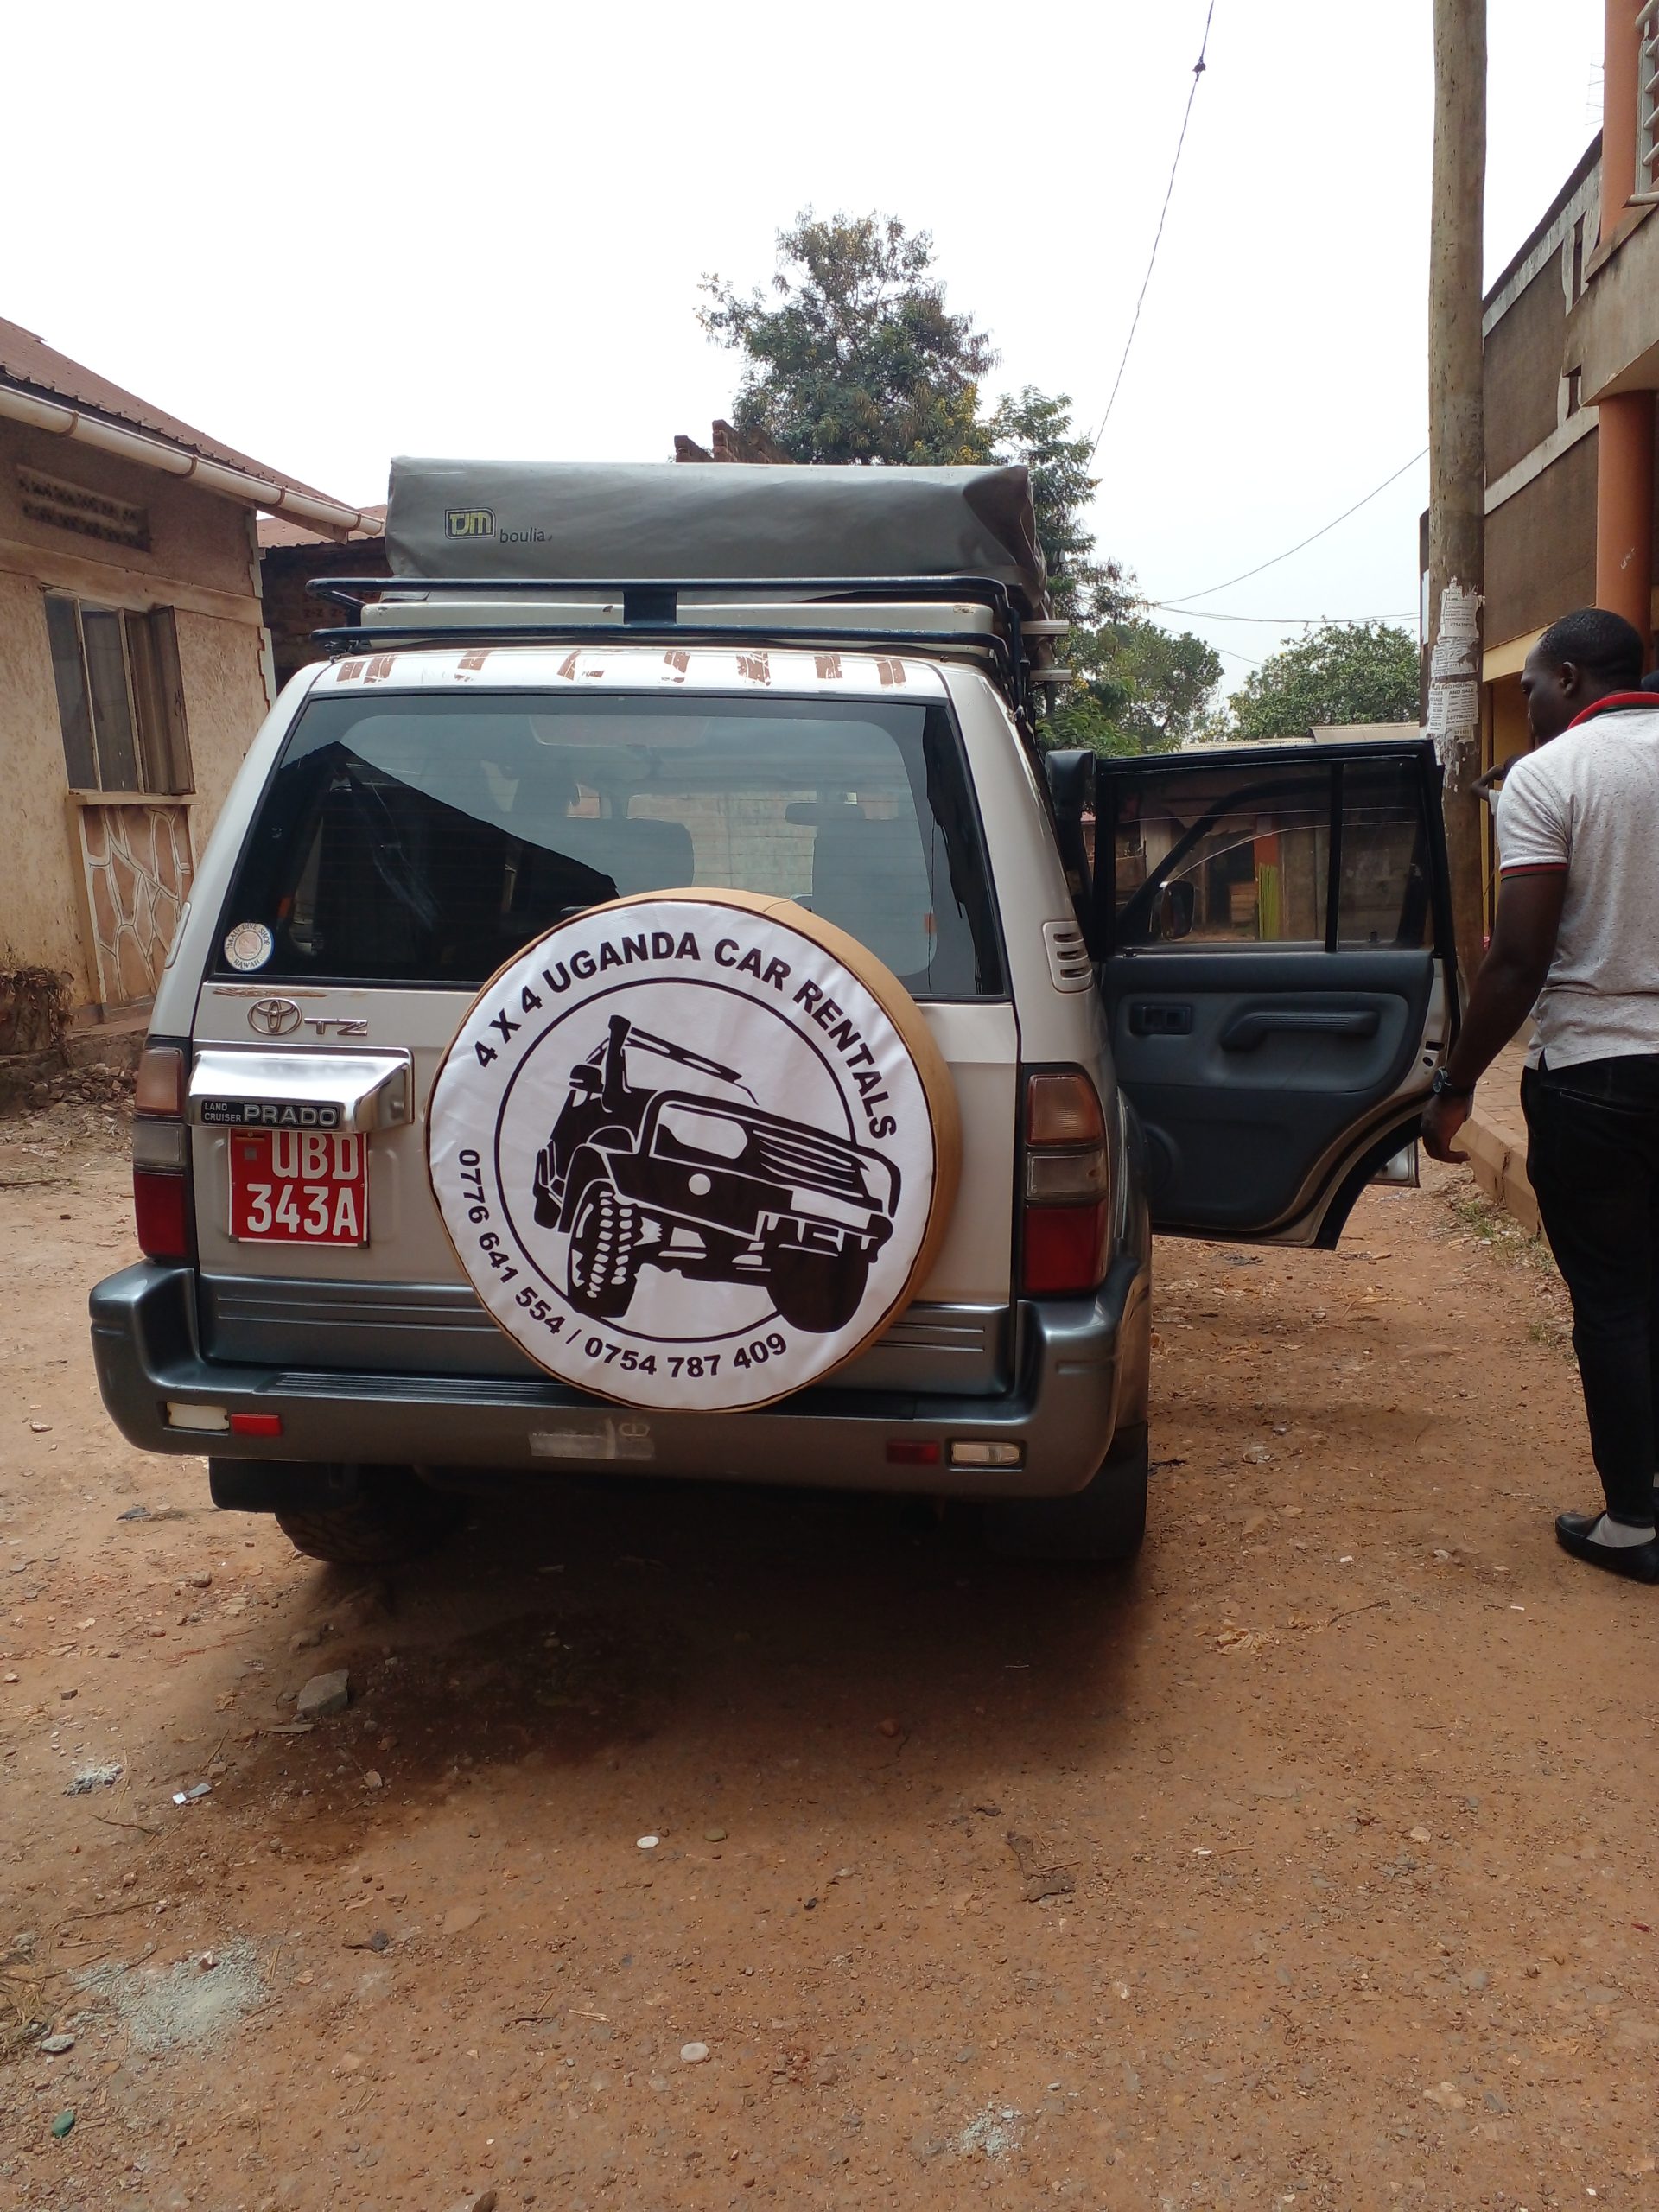 Where to go for self-drive safaris in Uganda